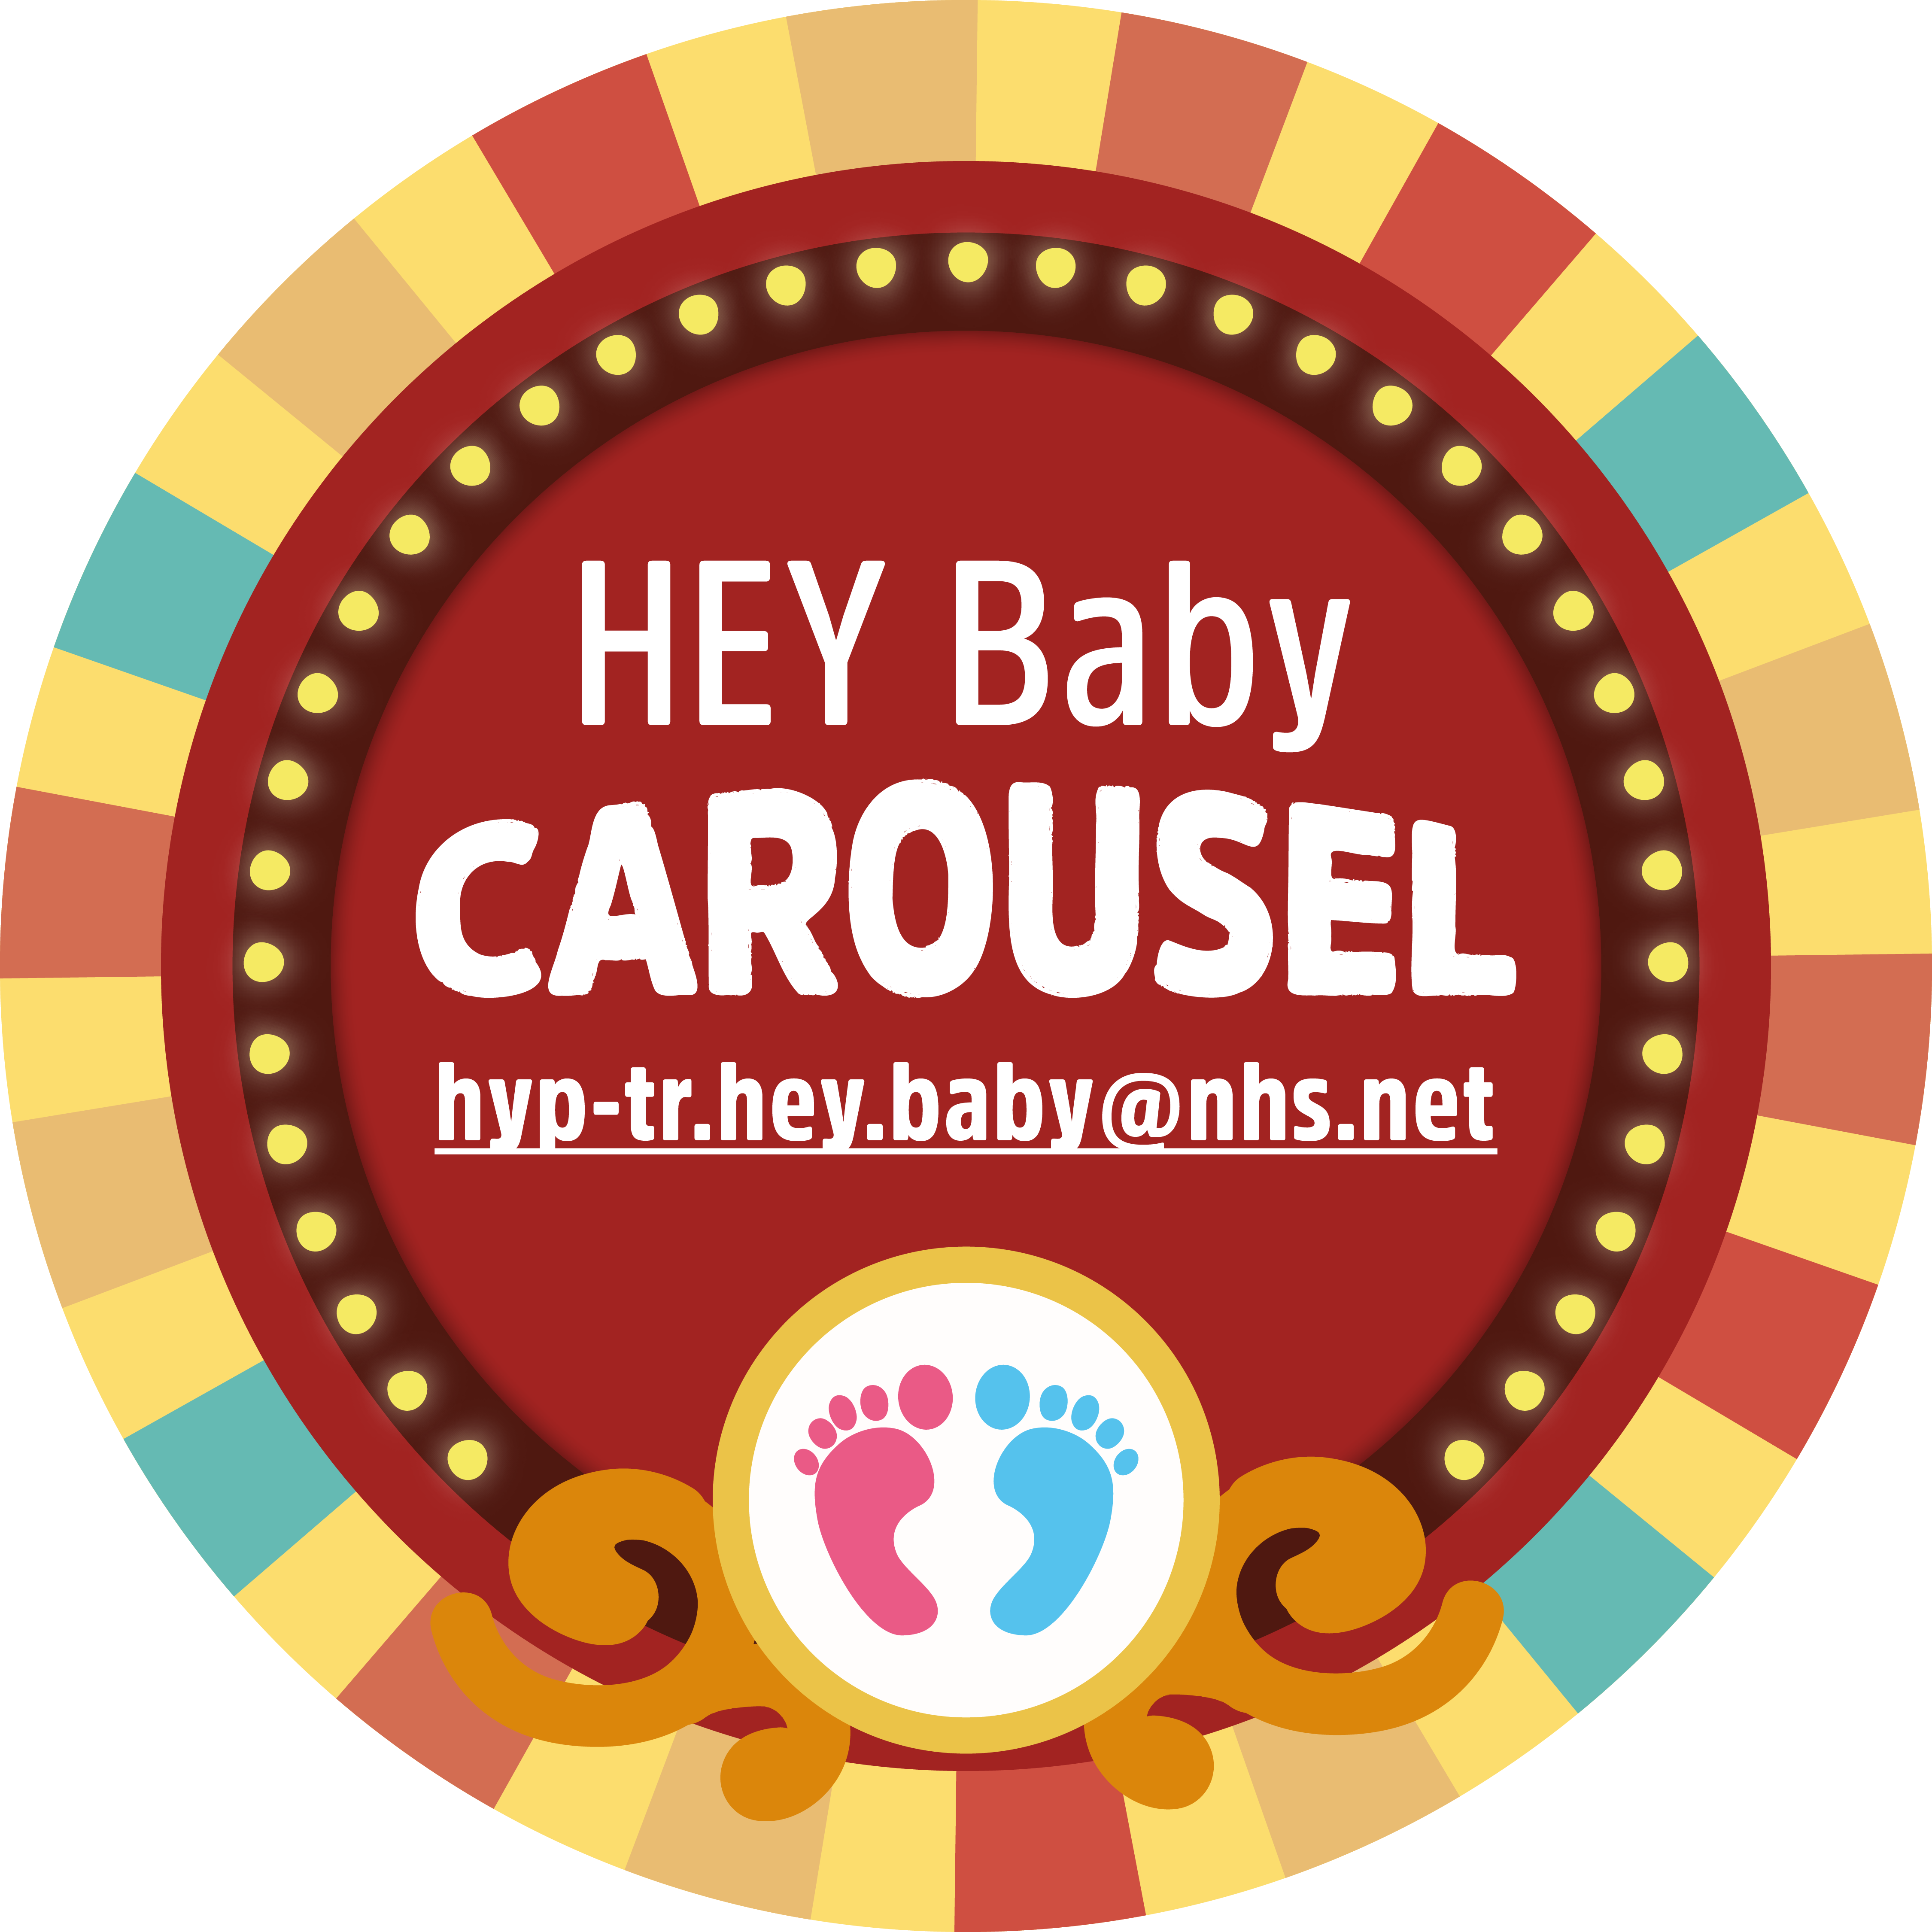 HEY Baby Carousel event